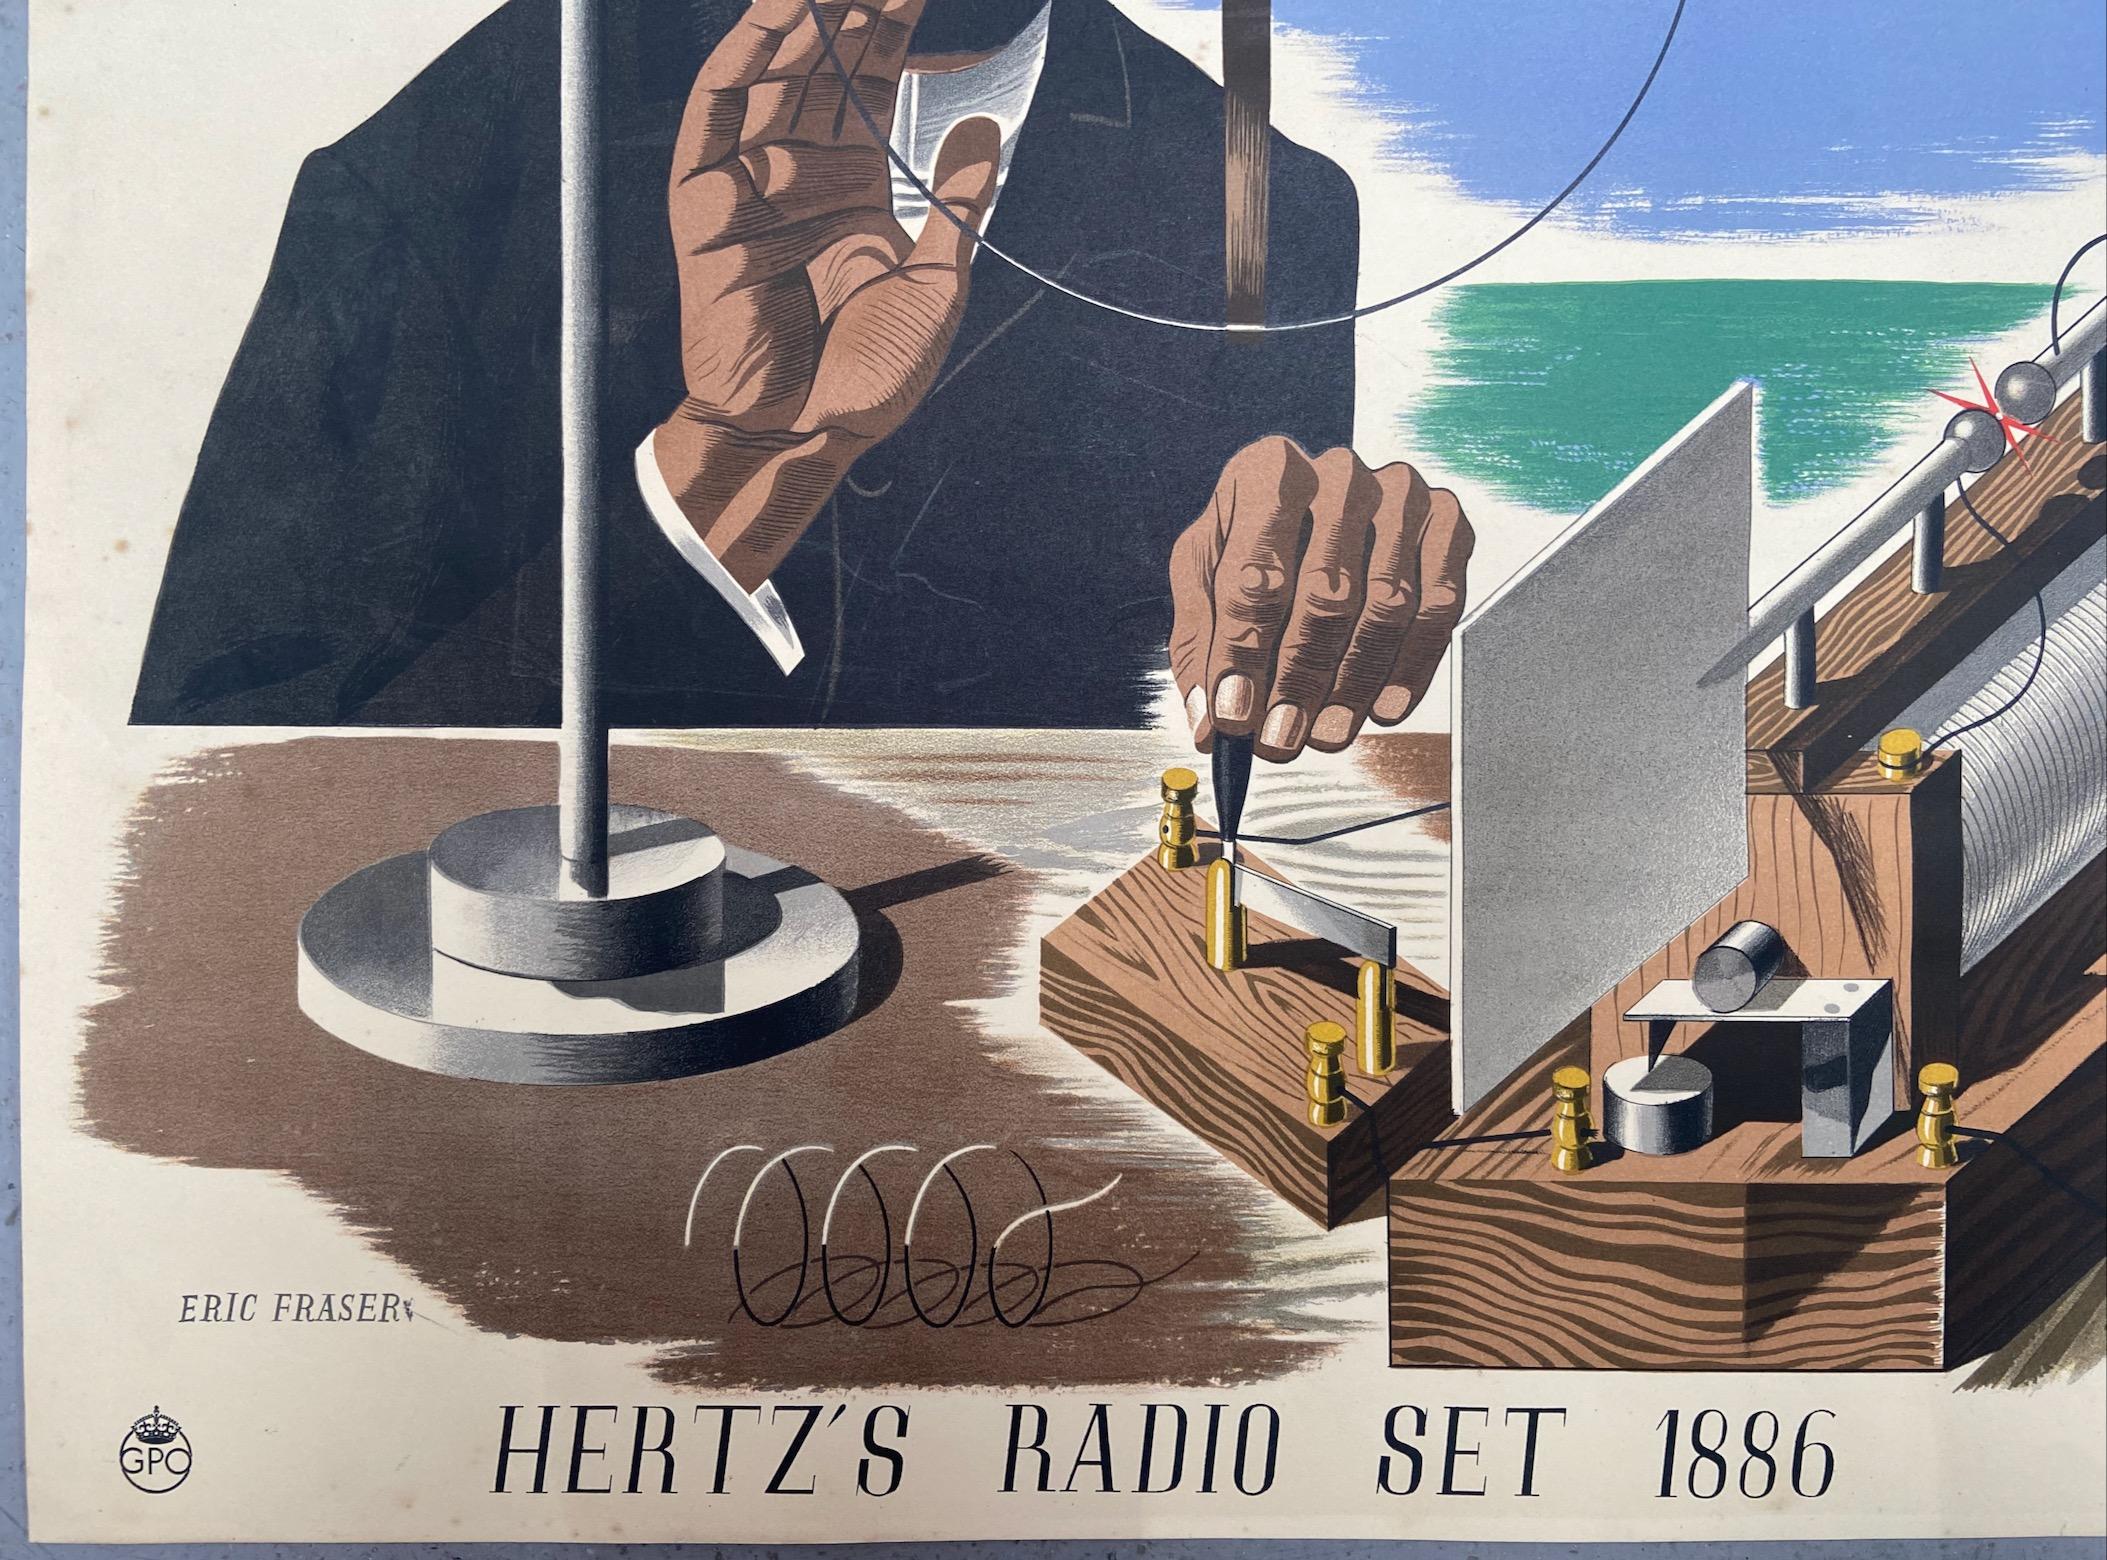 British Original 1940's GPO advertising poster, Hertz's radio set 1886, by Eric Fraser For Sale